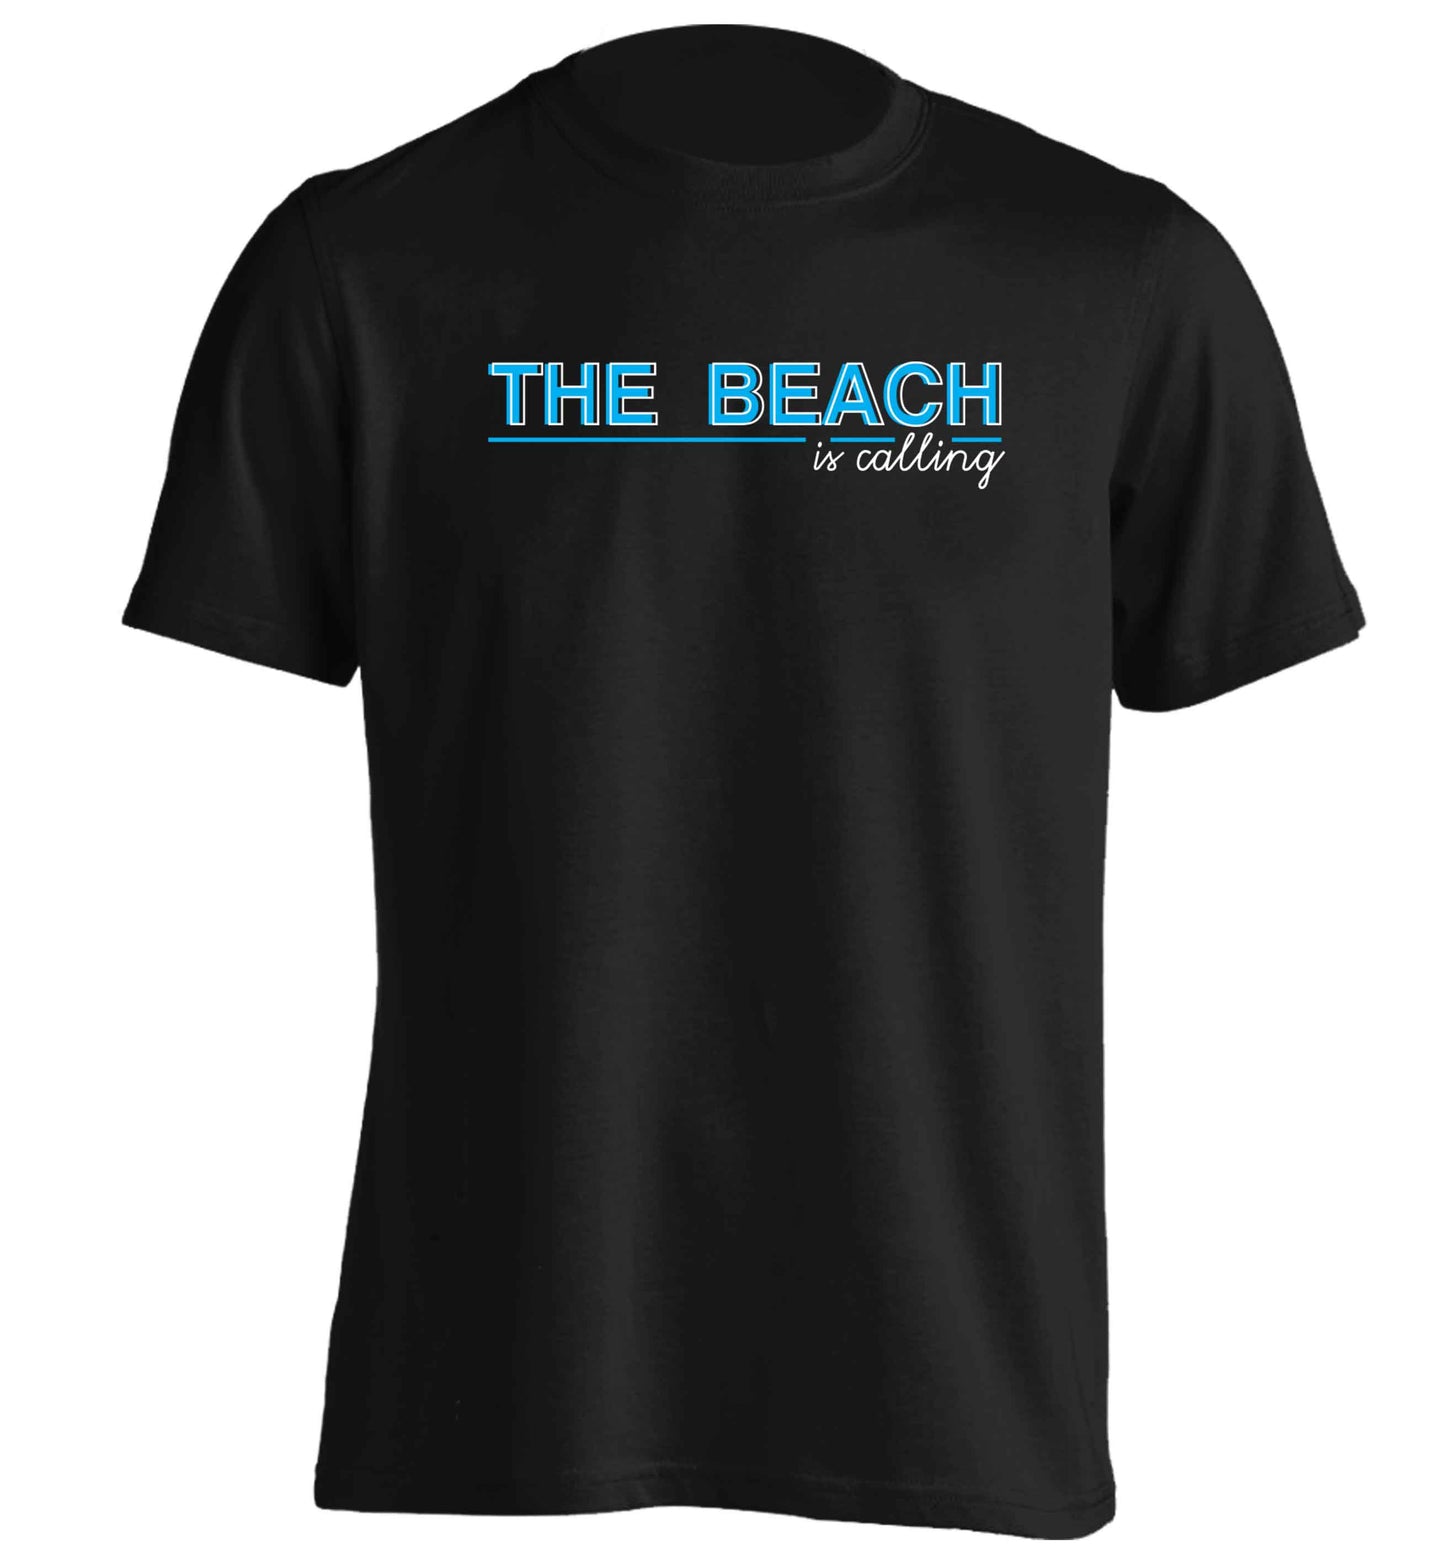 The beach is calling adults unisex black Tshirt 2XL